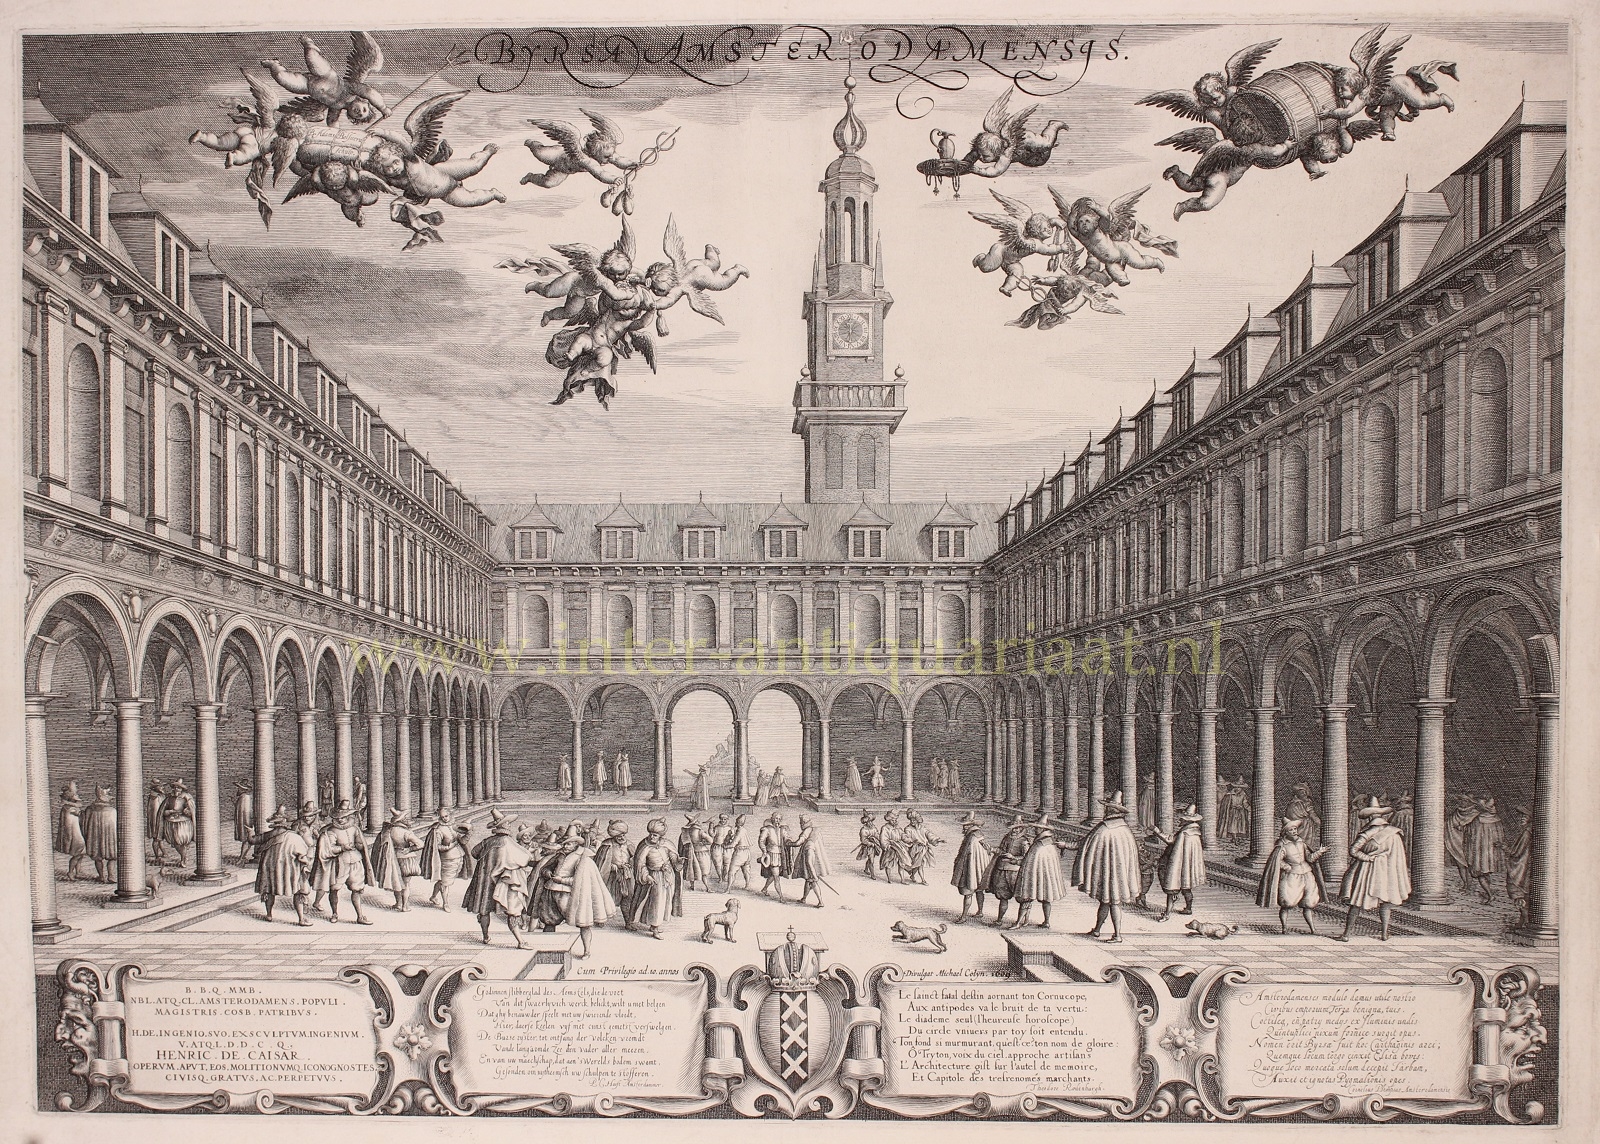  - Amsterdam, first stock exchange - Botius Adamsz. Bolswert, 1609